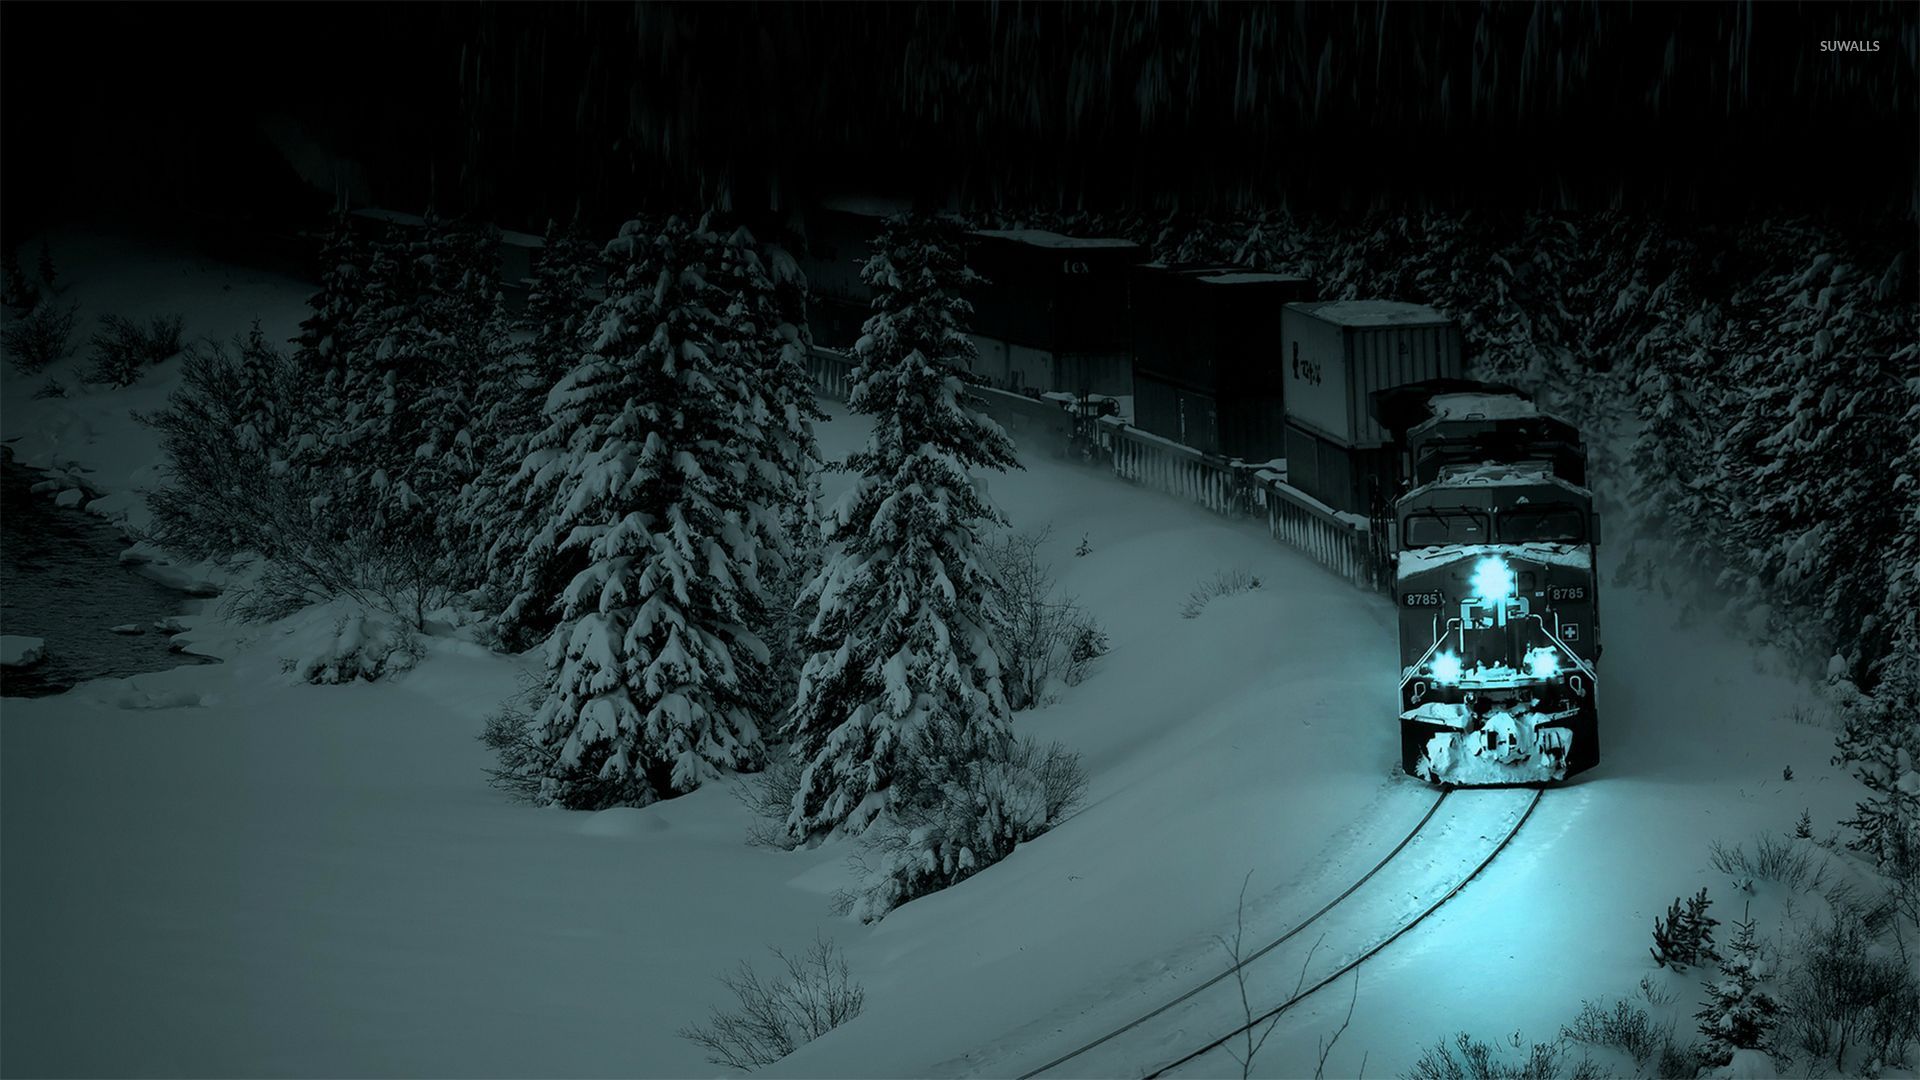 Train in the winter night wallpaper wallpaper